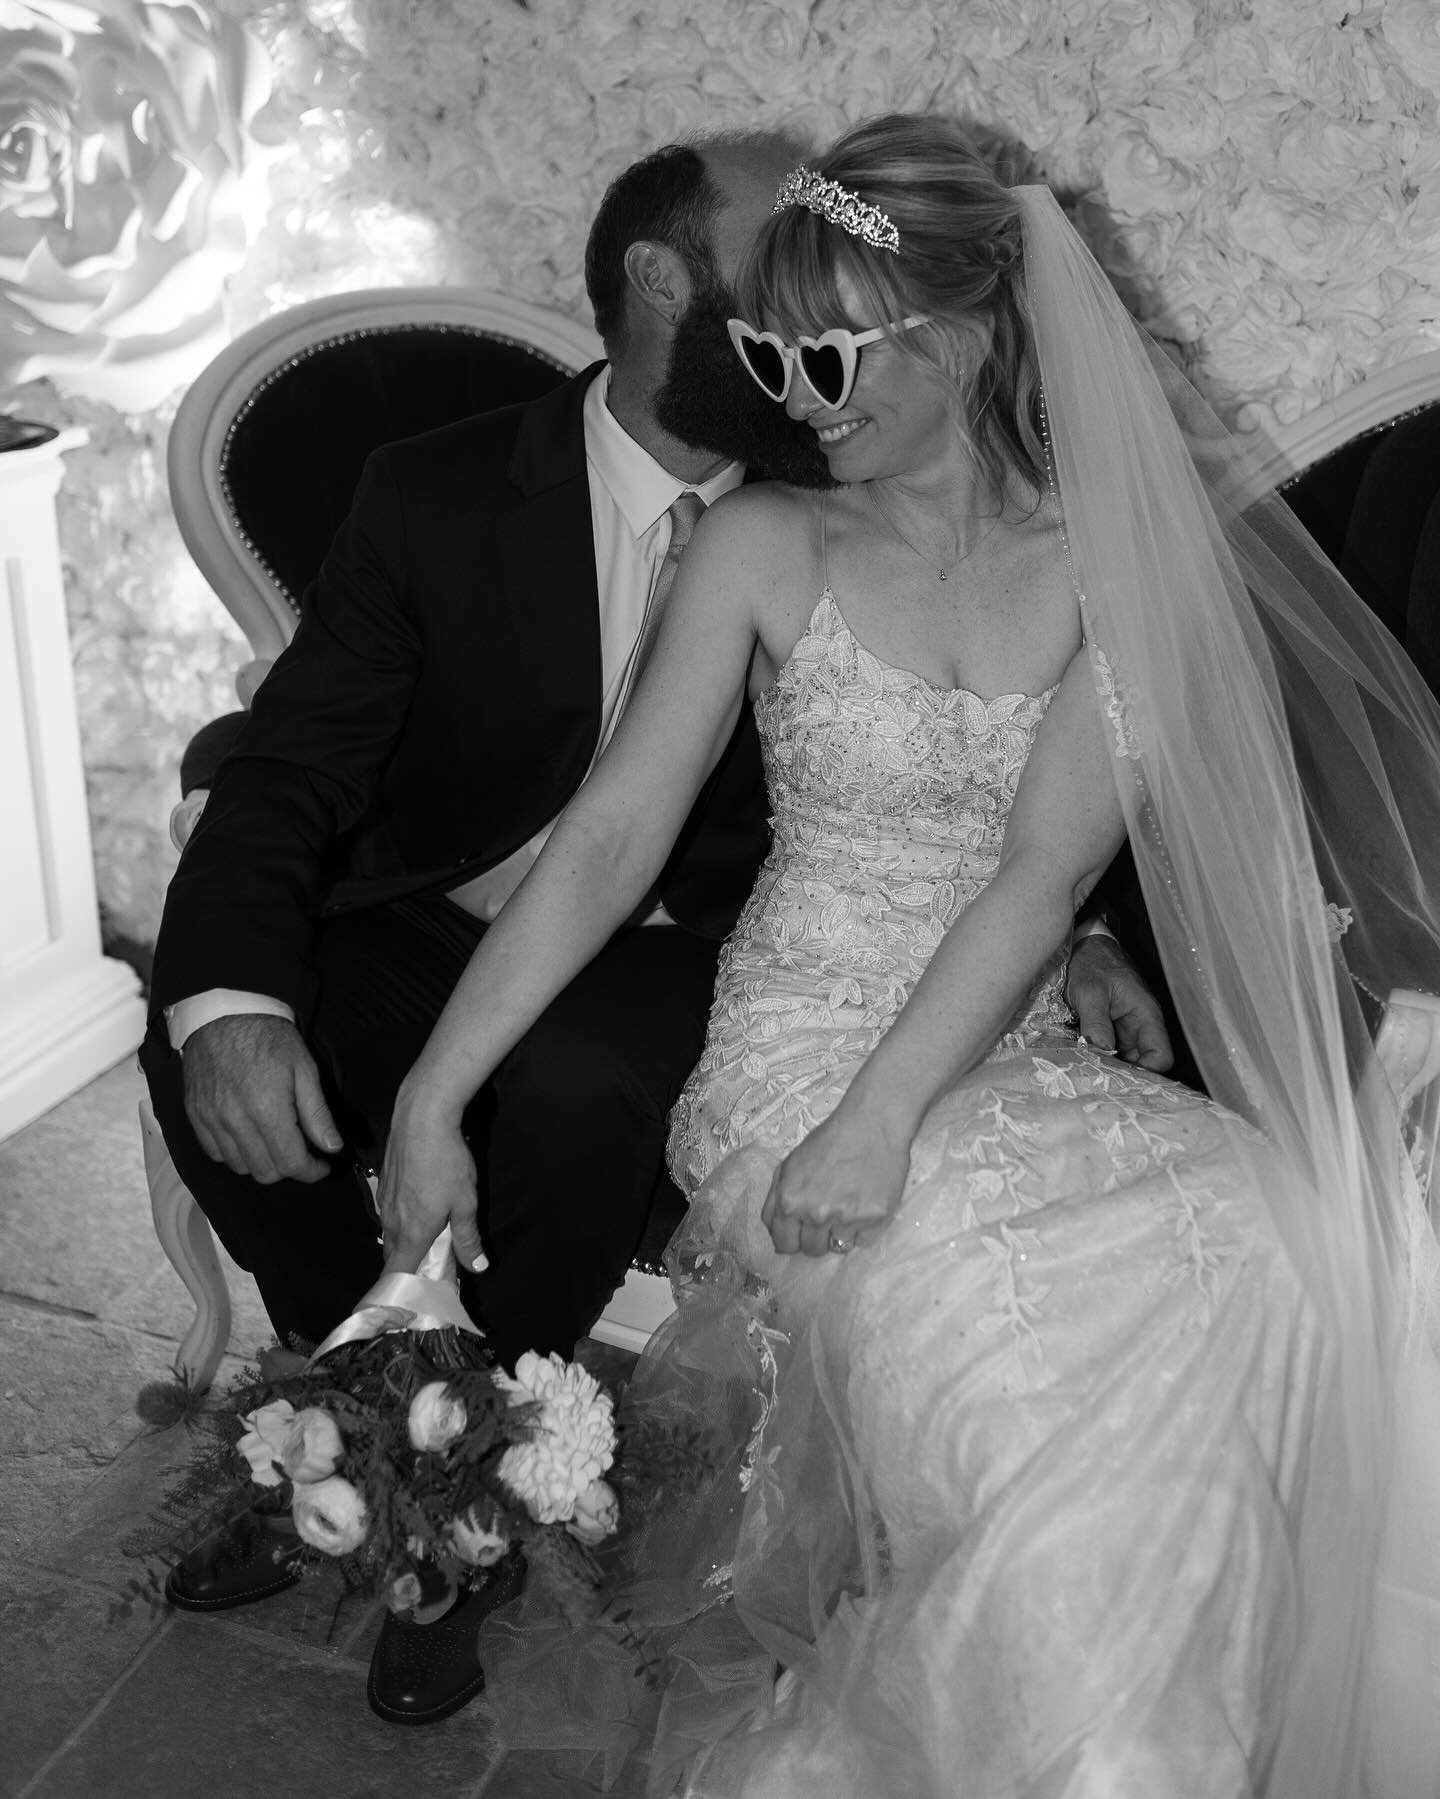 👏 Let&rsquo;s hear it for the Black &amp; White drama&hellip;
.
Photography: @laceyhillphotos 
Lux Faux Florals: @onedayaffair 
Venue: @onedaysocialaffair 
.
#weddingvenue #microweddingvenue #intimatewedding #halifaxweddings #novascotiavenue #weddin